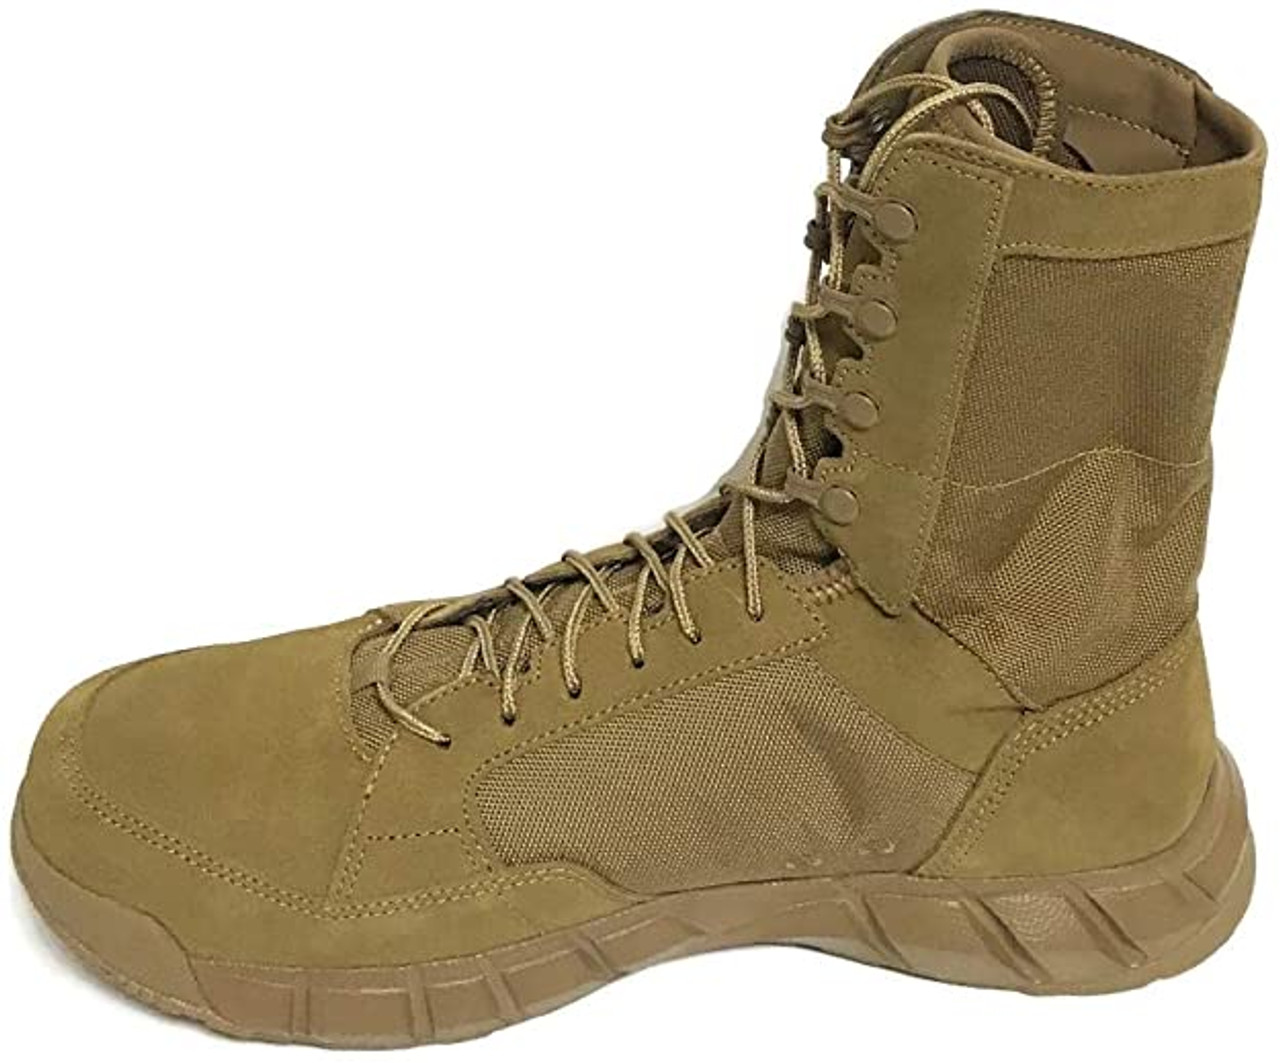 Oakley Men's Light Assault 2 Boots Coyote Size 11